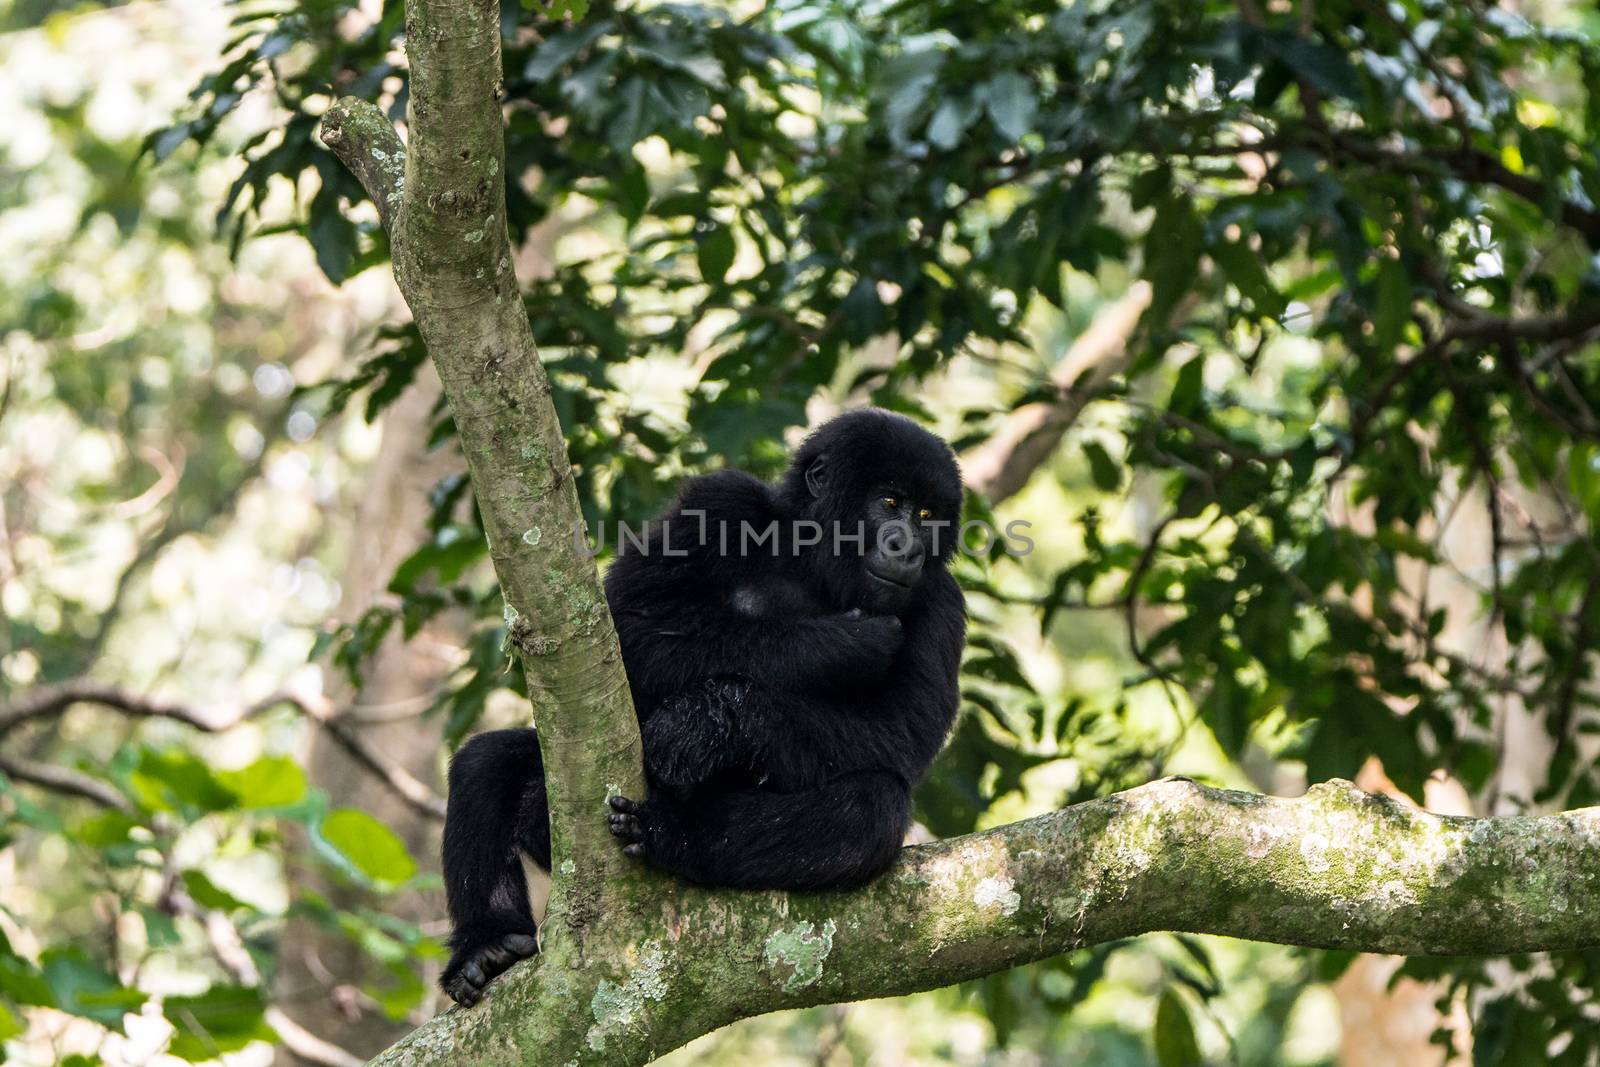 Mountain gorilla in a tree in the Virunga National Park, Democratic Republic Of Congo.